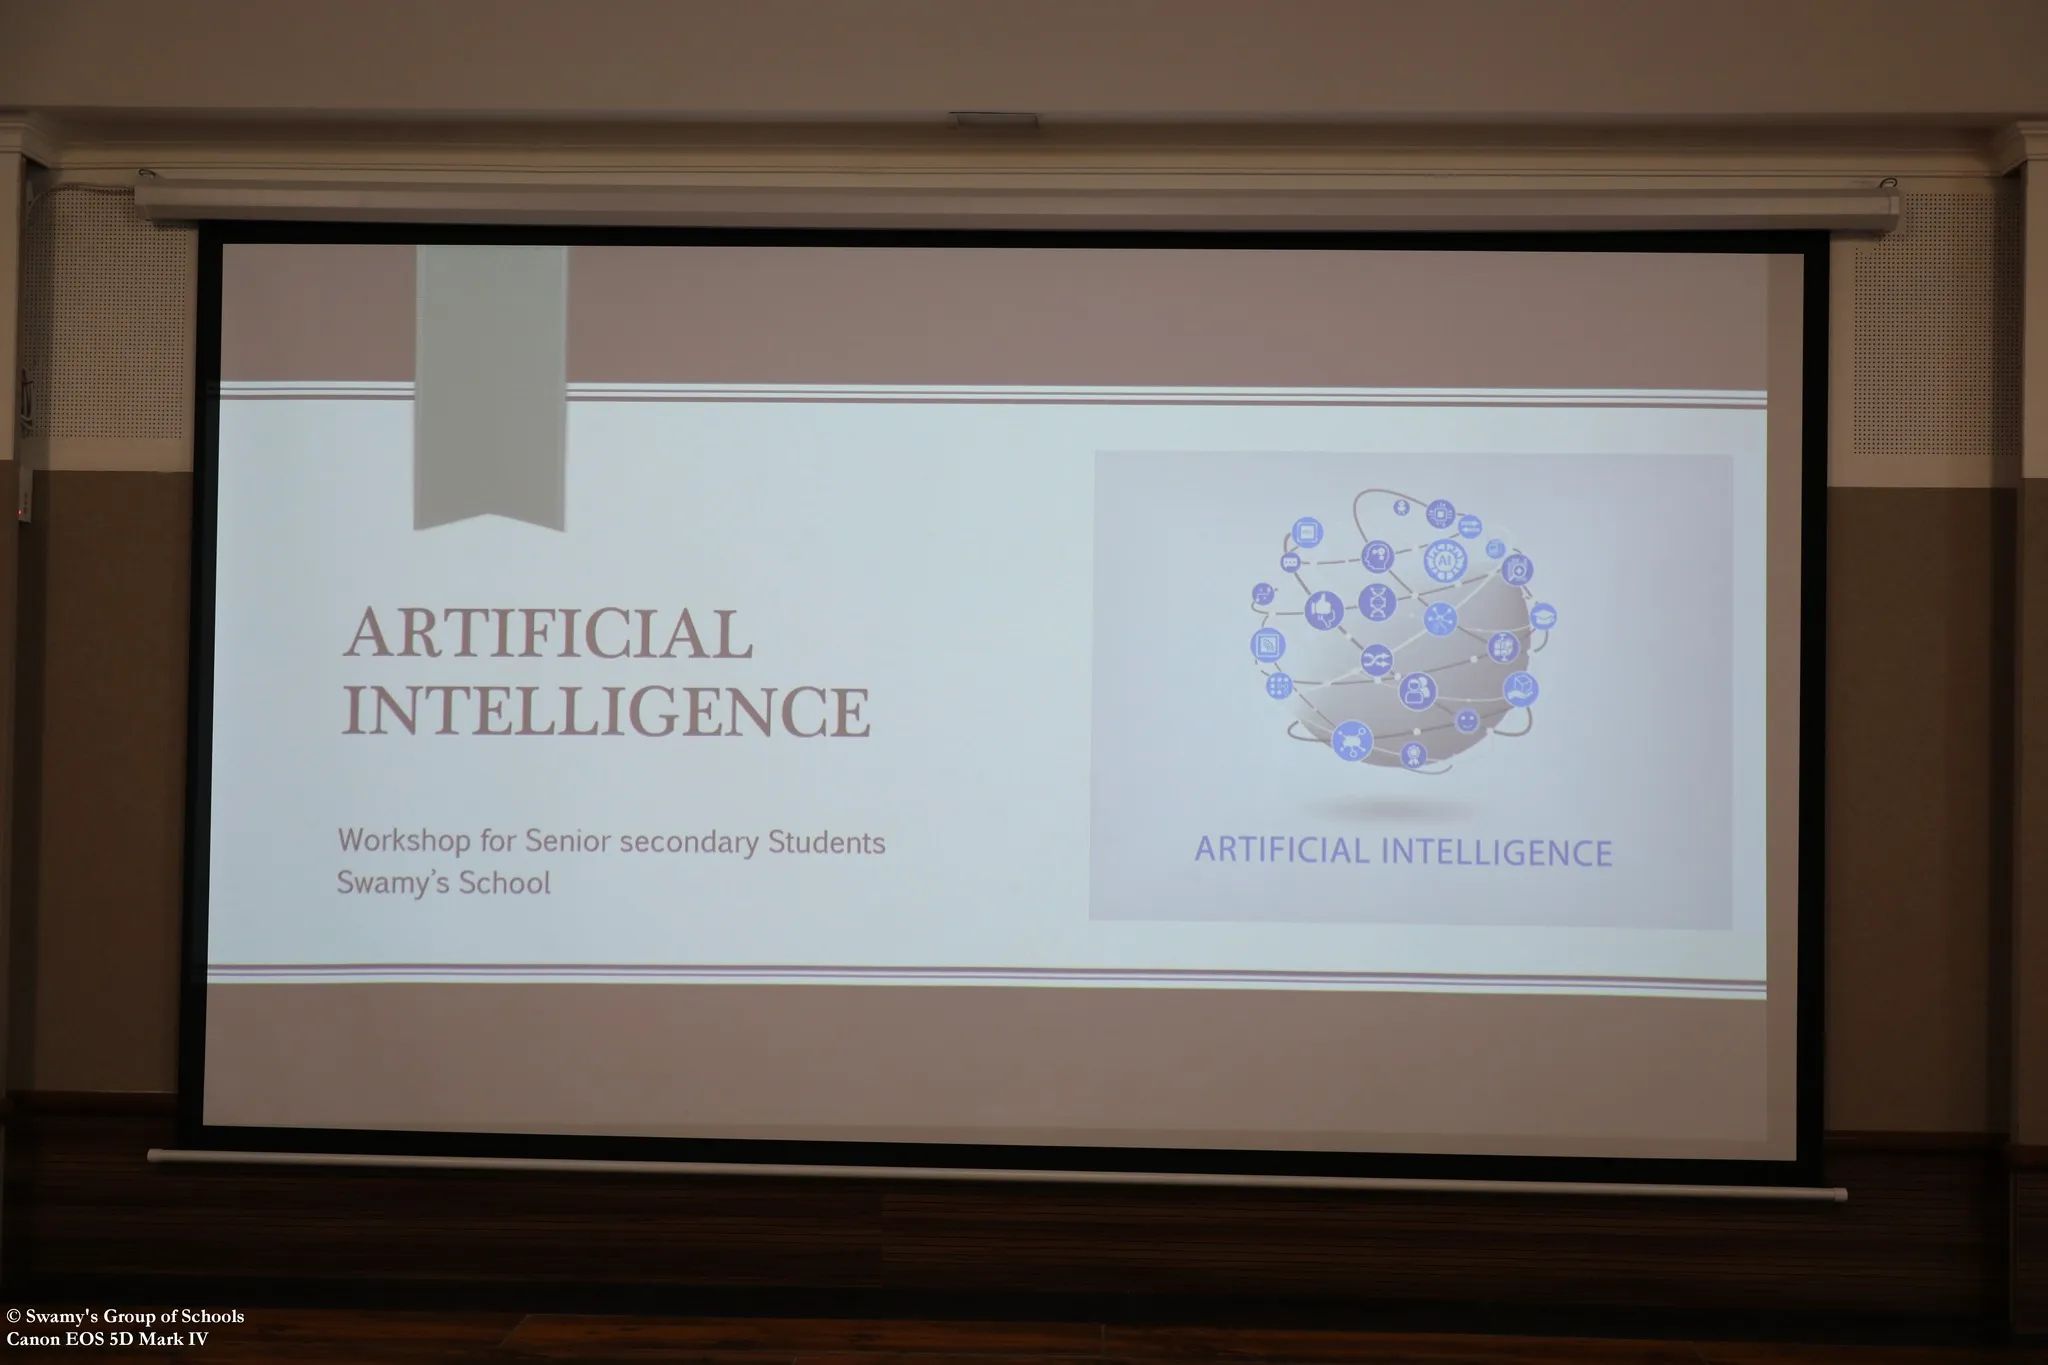 Artificial Intelligence Workshop